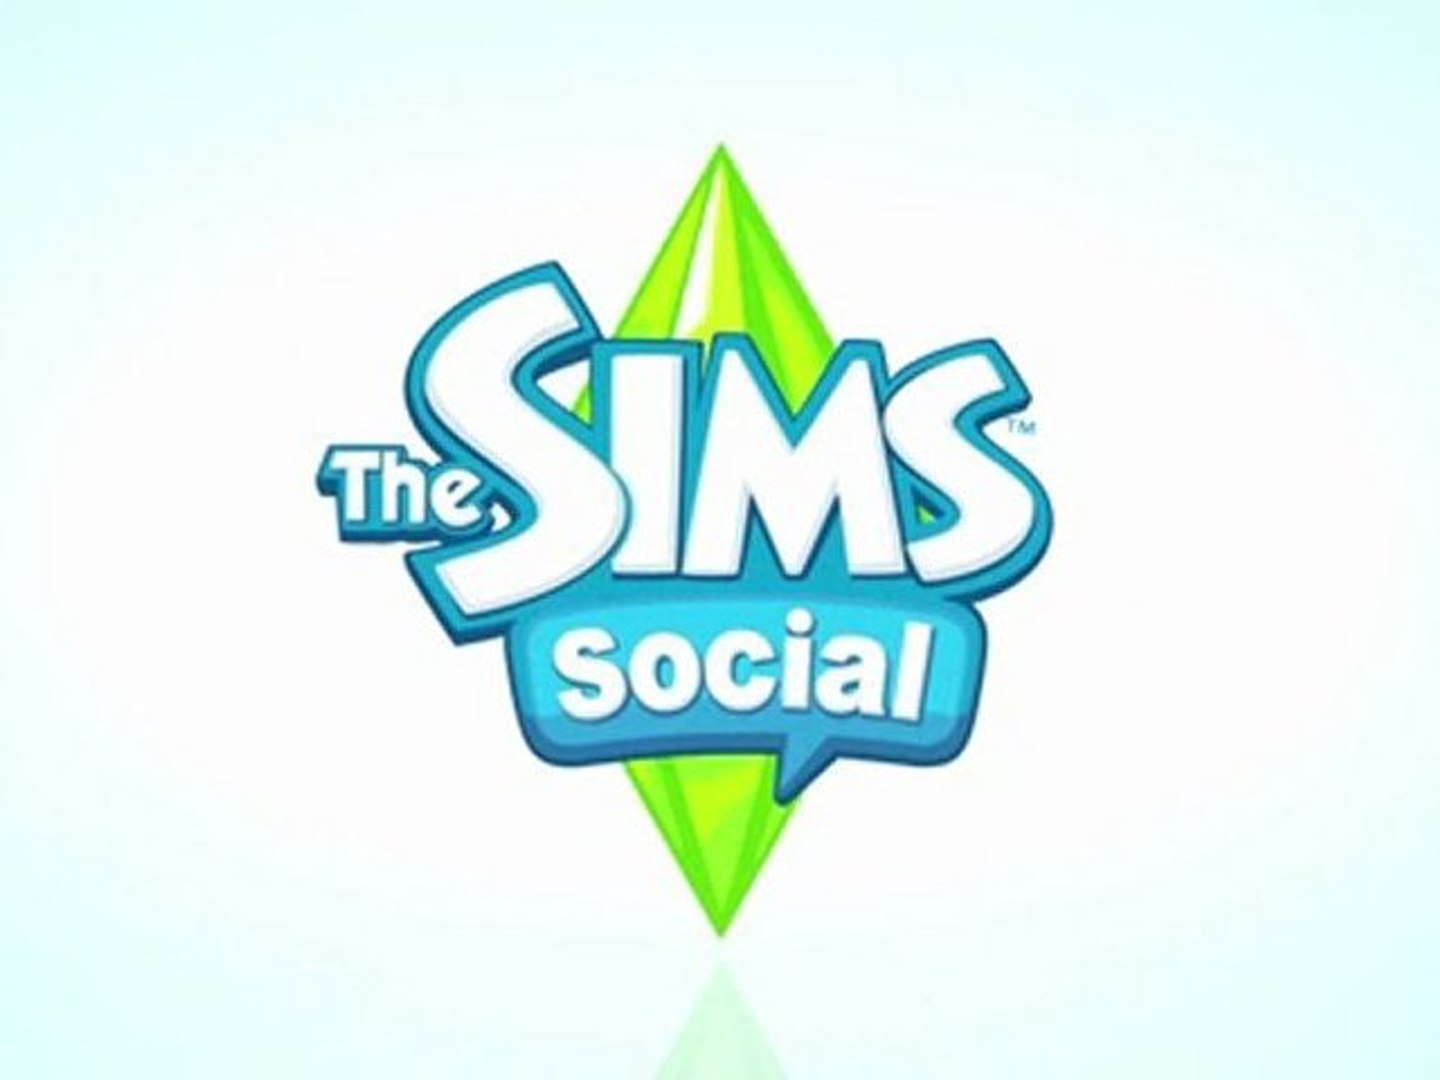 The Sims Social sur Facebook - Replay Video [HD] - Vidéo Dailymotion